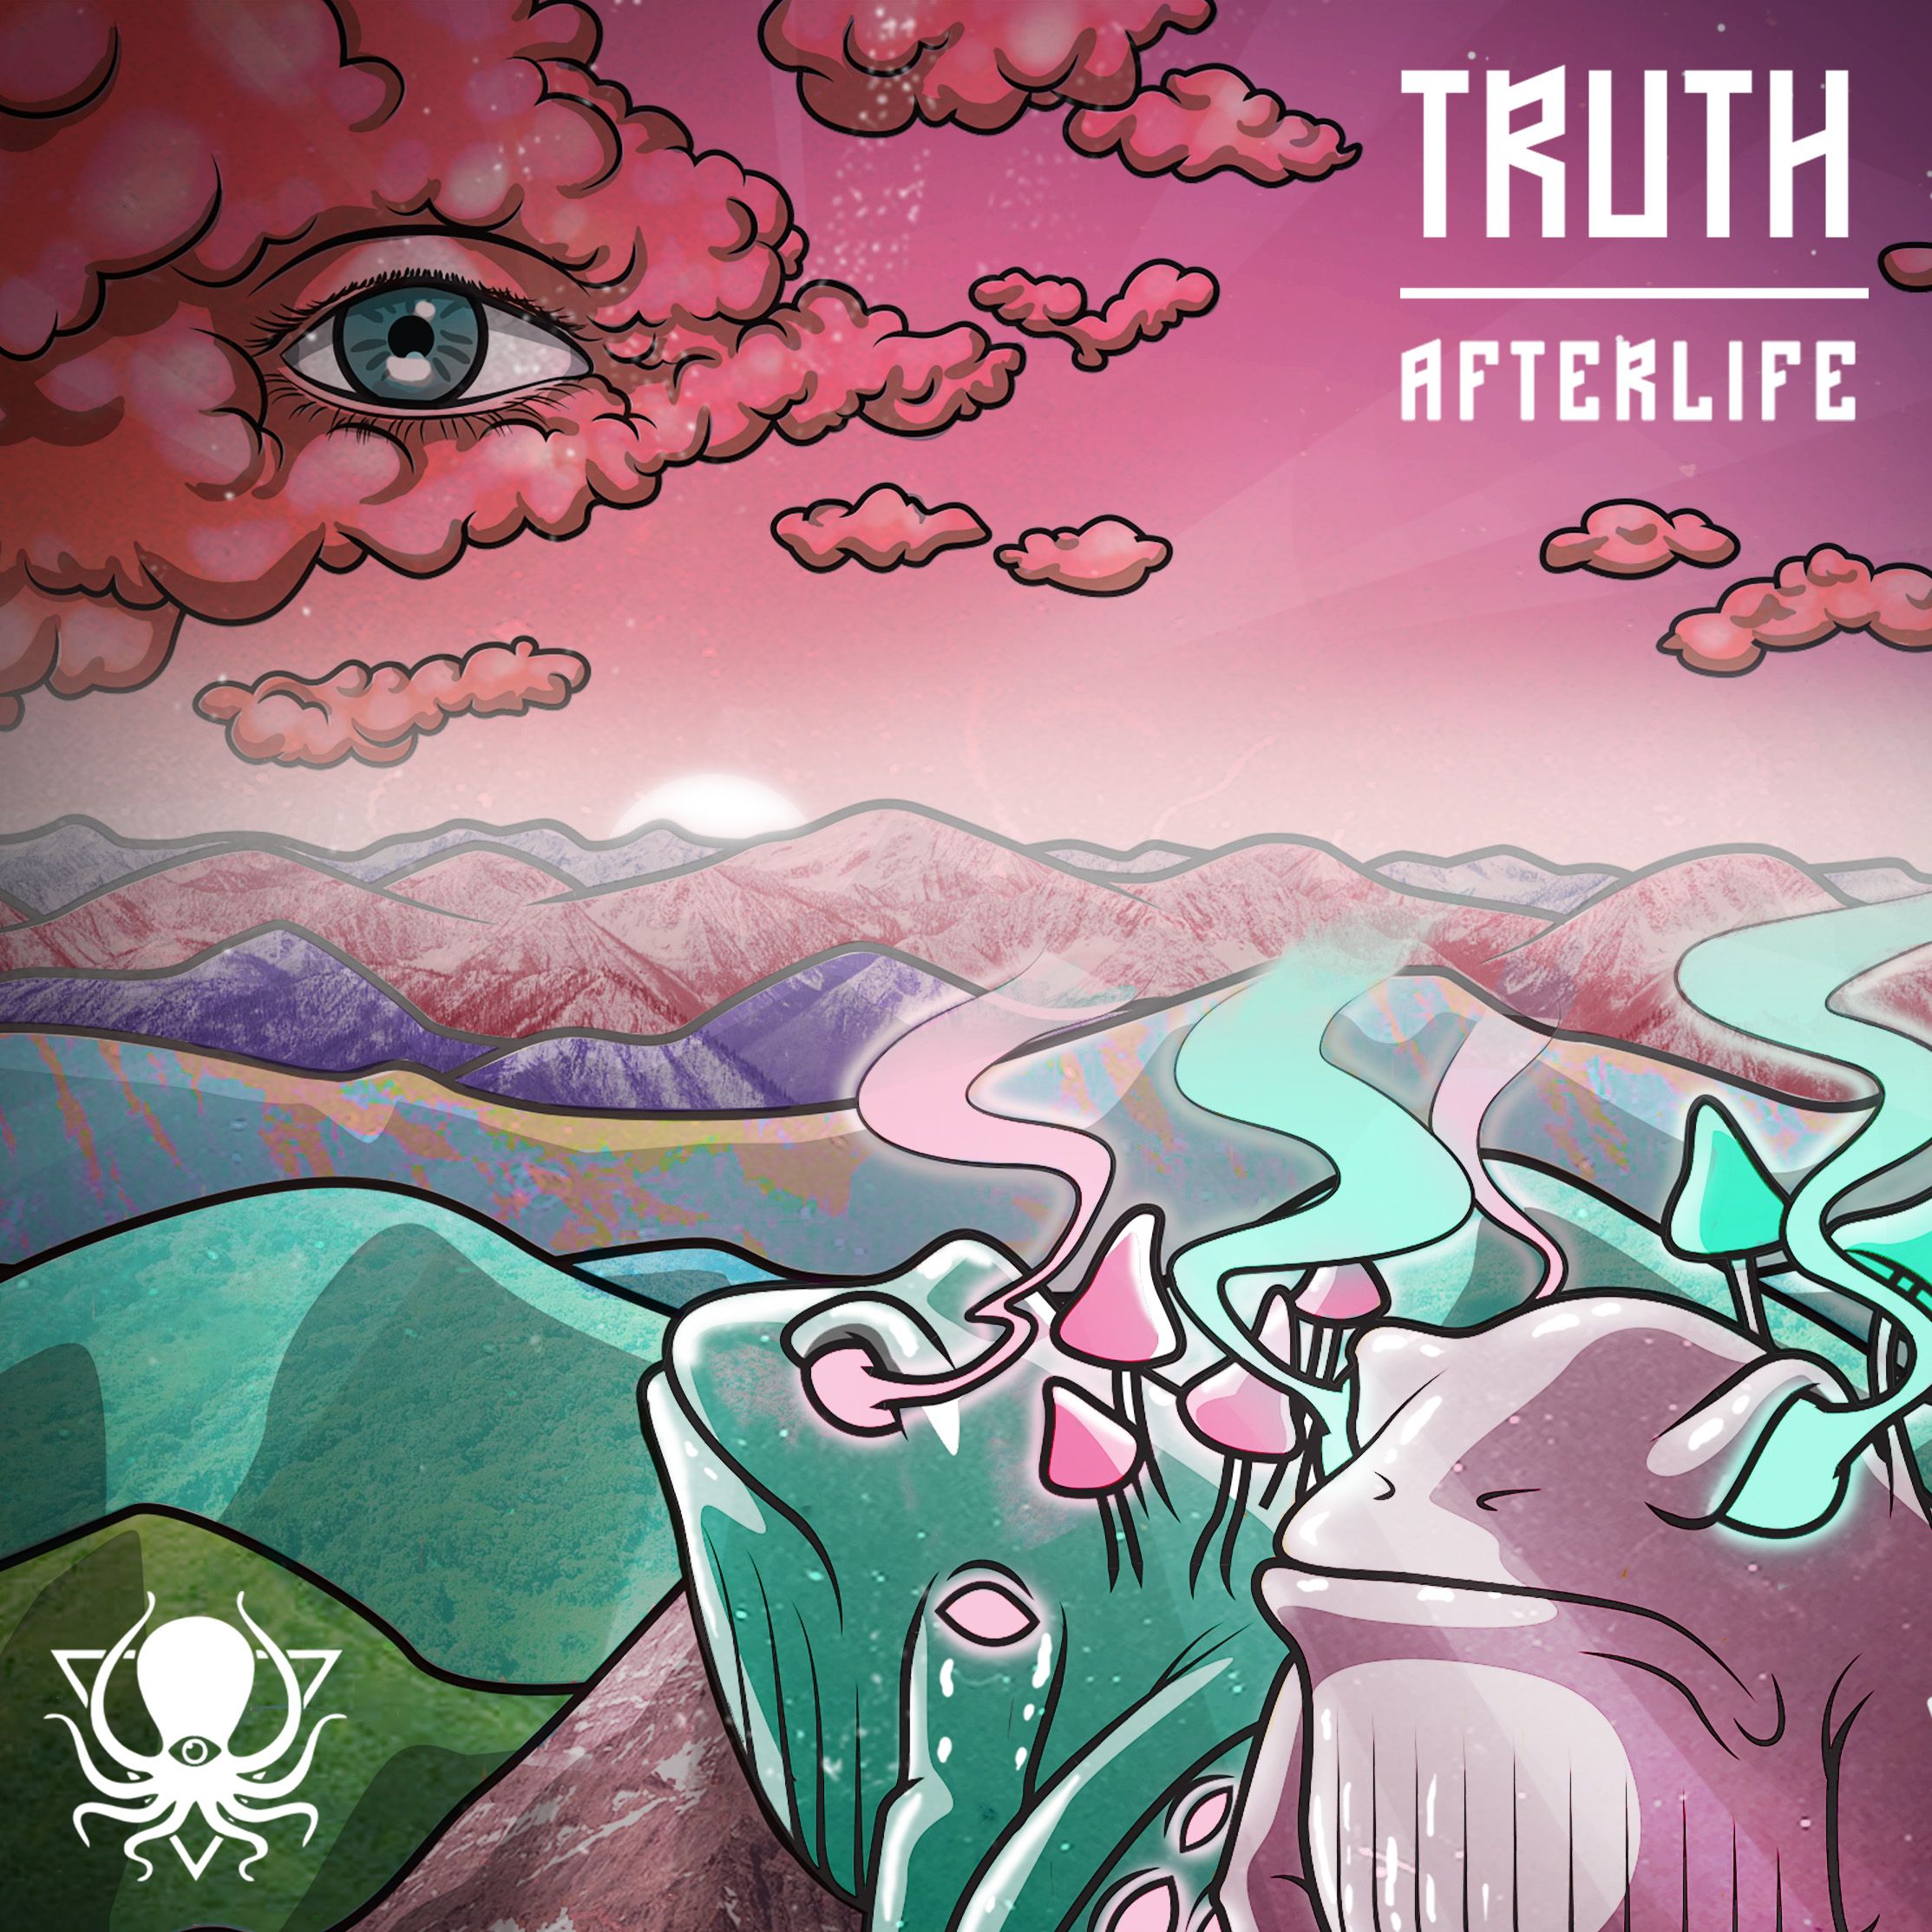 Ladda ner Truth - Afterlife (DDD095)